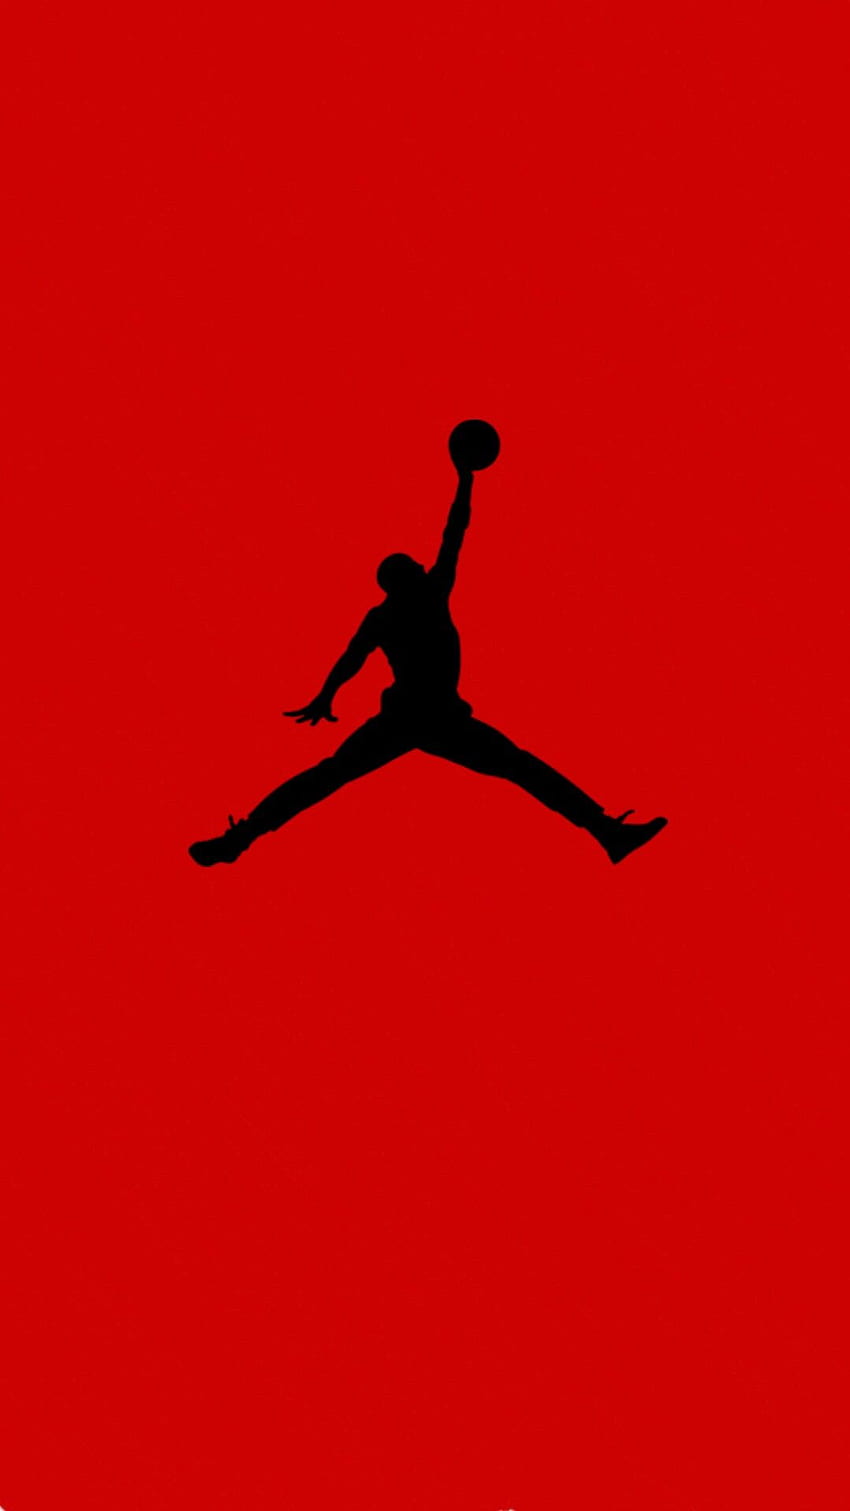 Air jordan logo iphone background. Background for iphone en 2019, Blue Jordan Logo HD phone wallpaper